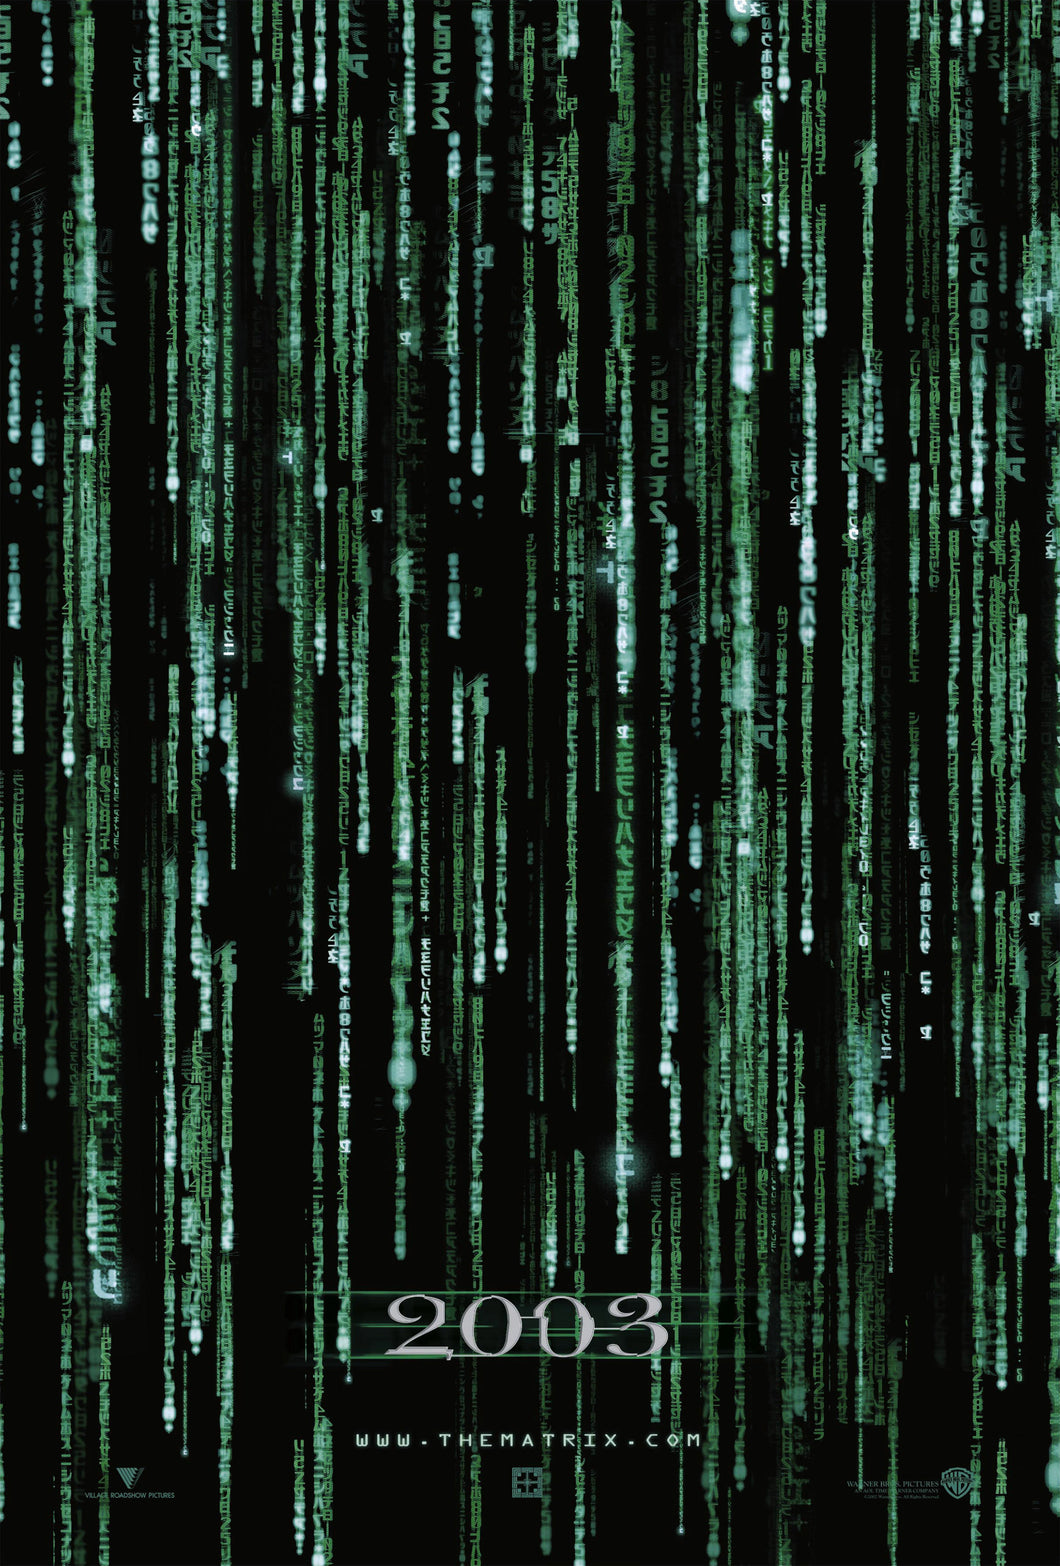 Poster Pelicula The Matrix Reloaded